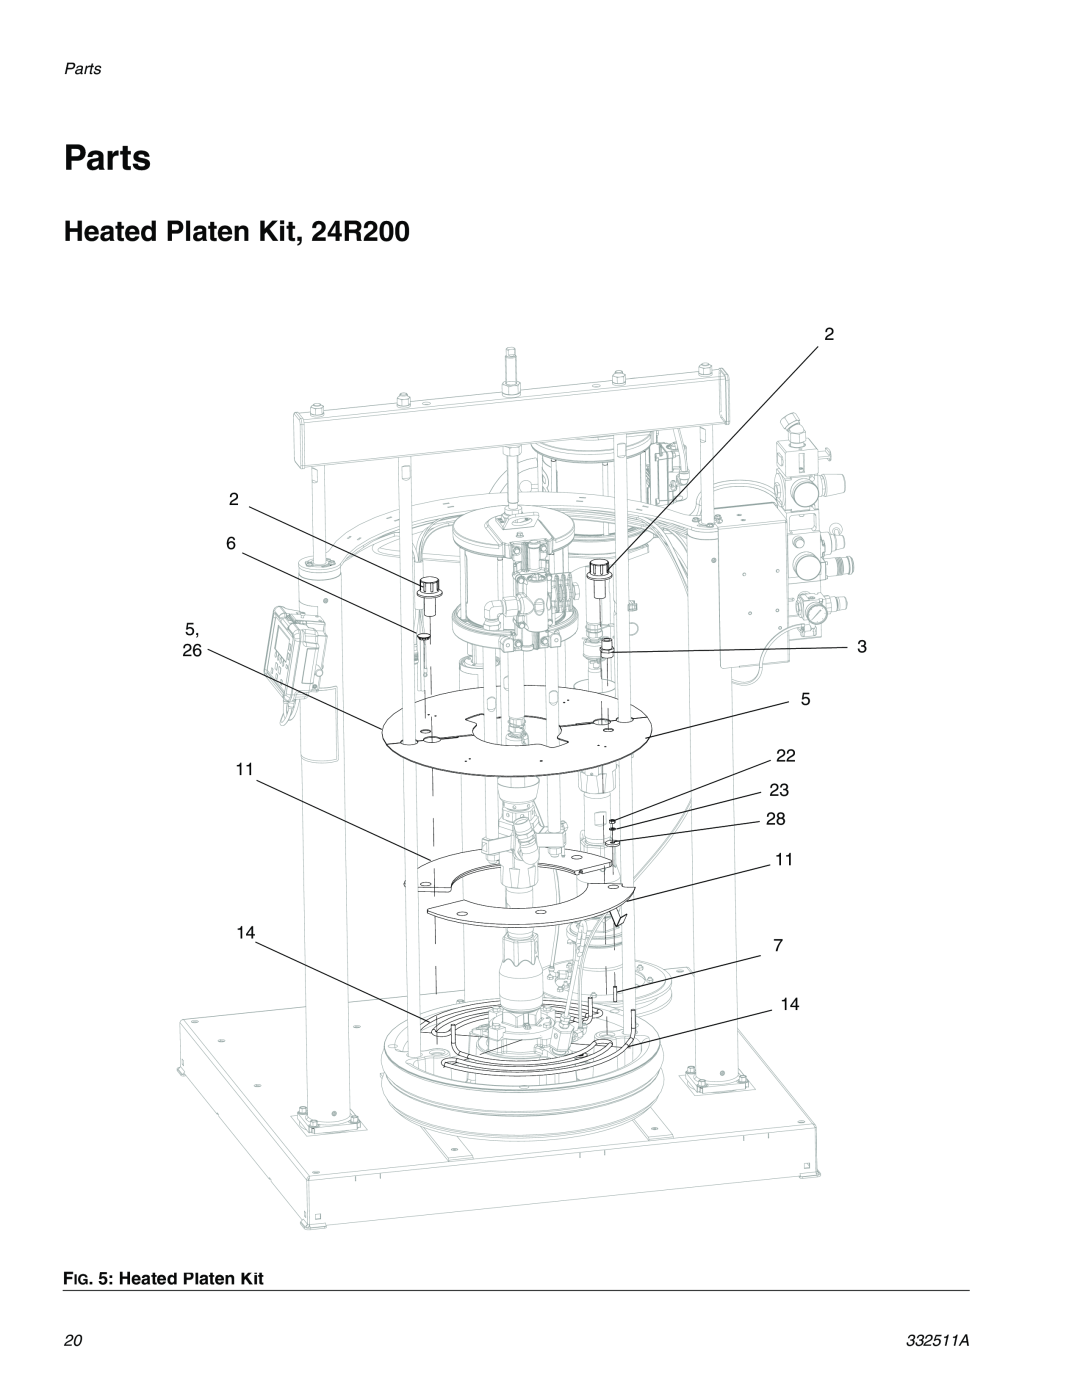 Graco operation manual Parts, Heated Platen Kit, 24R200 